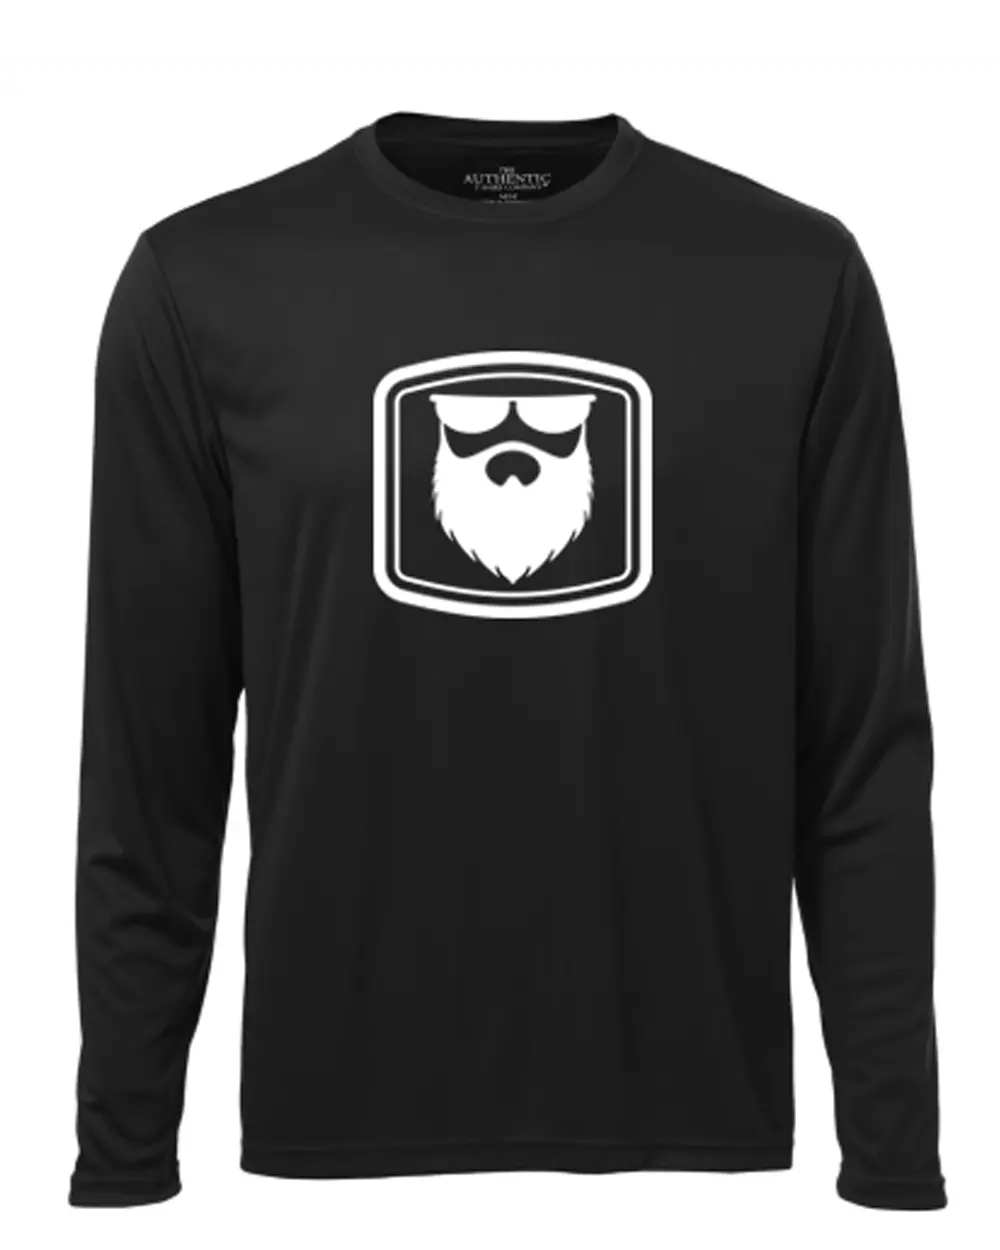 THE OG BEARD 2.0 Black Long Sleeve Shirt|Long Sleeve Shirt